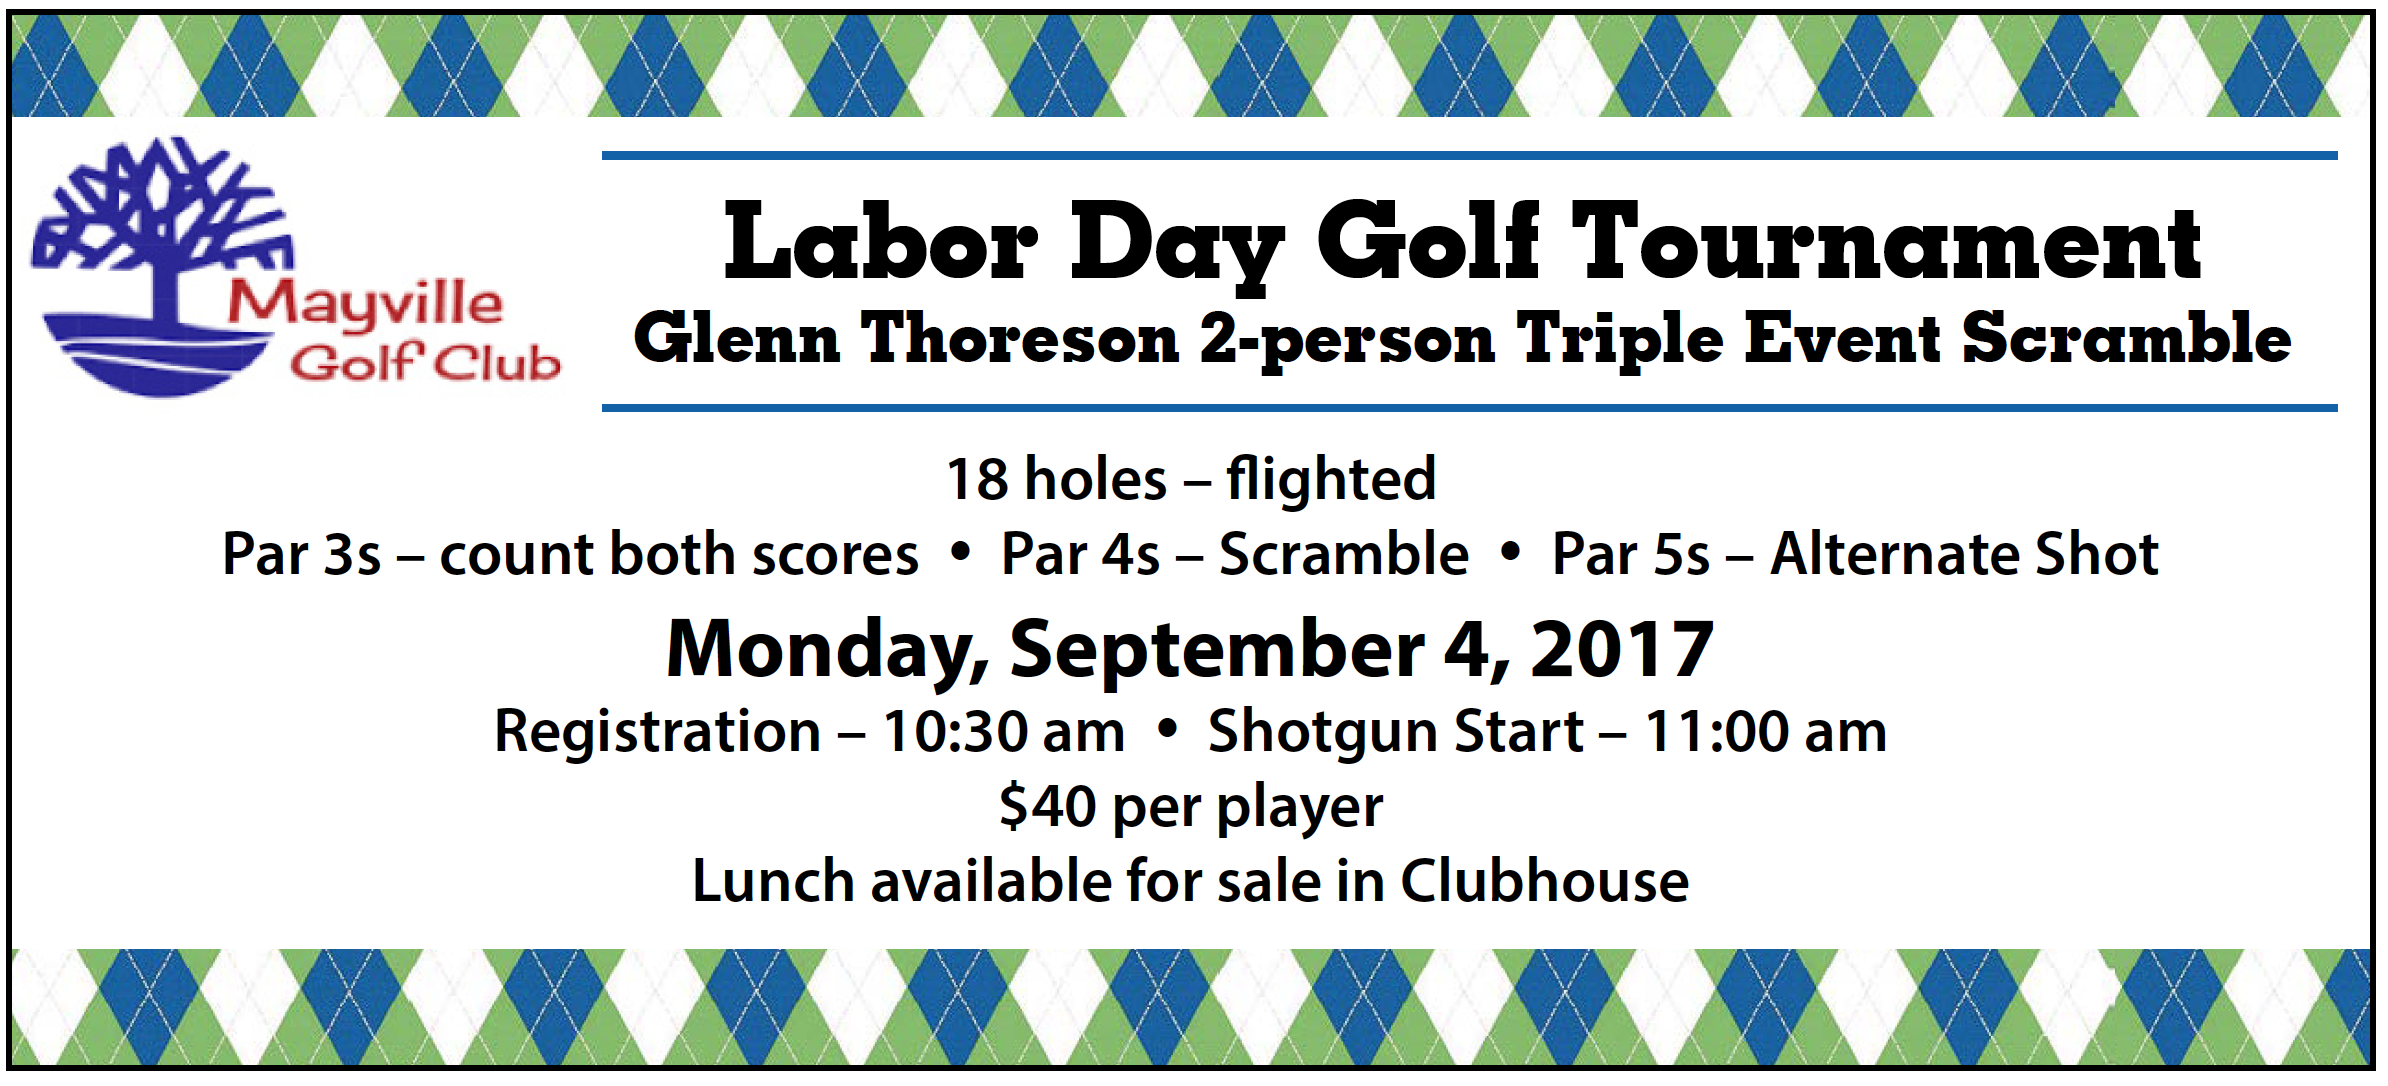 Labor Day Golf Tournament @ Mayville Golf Club